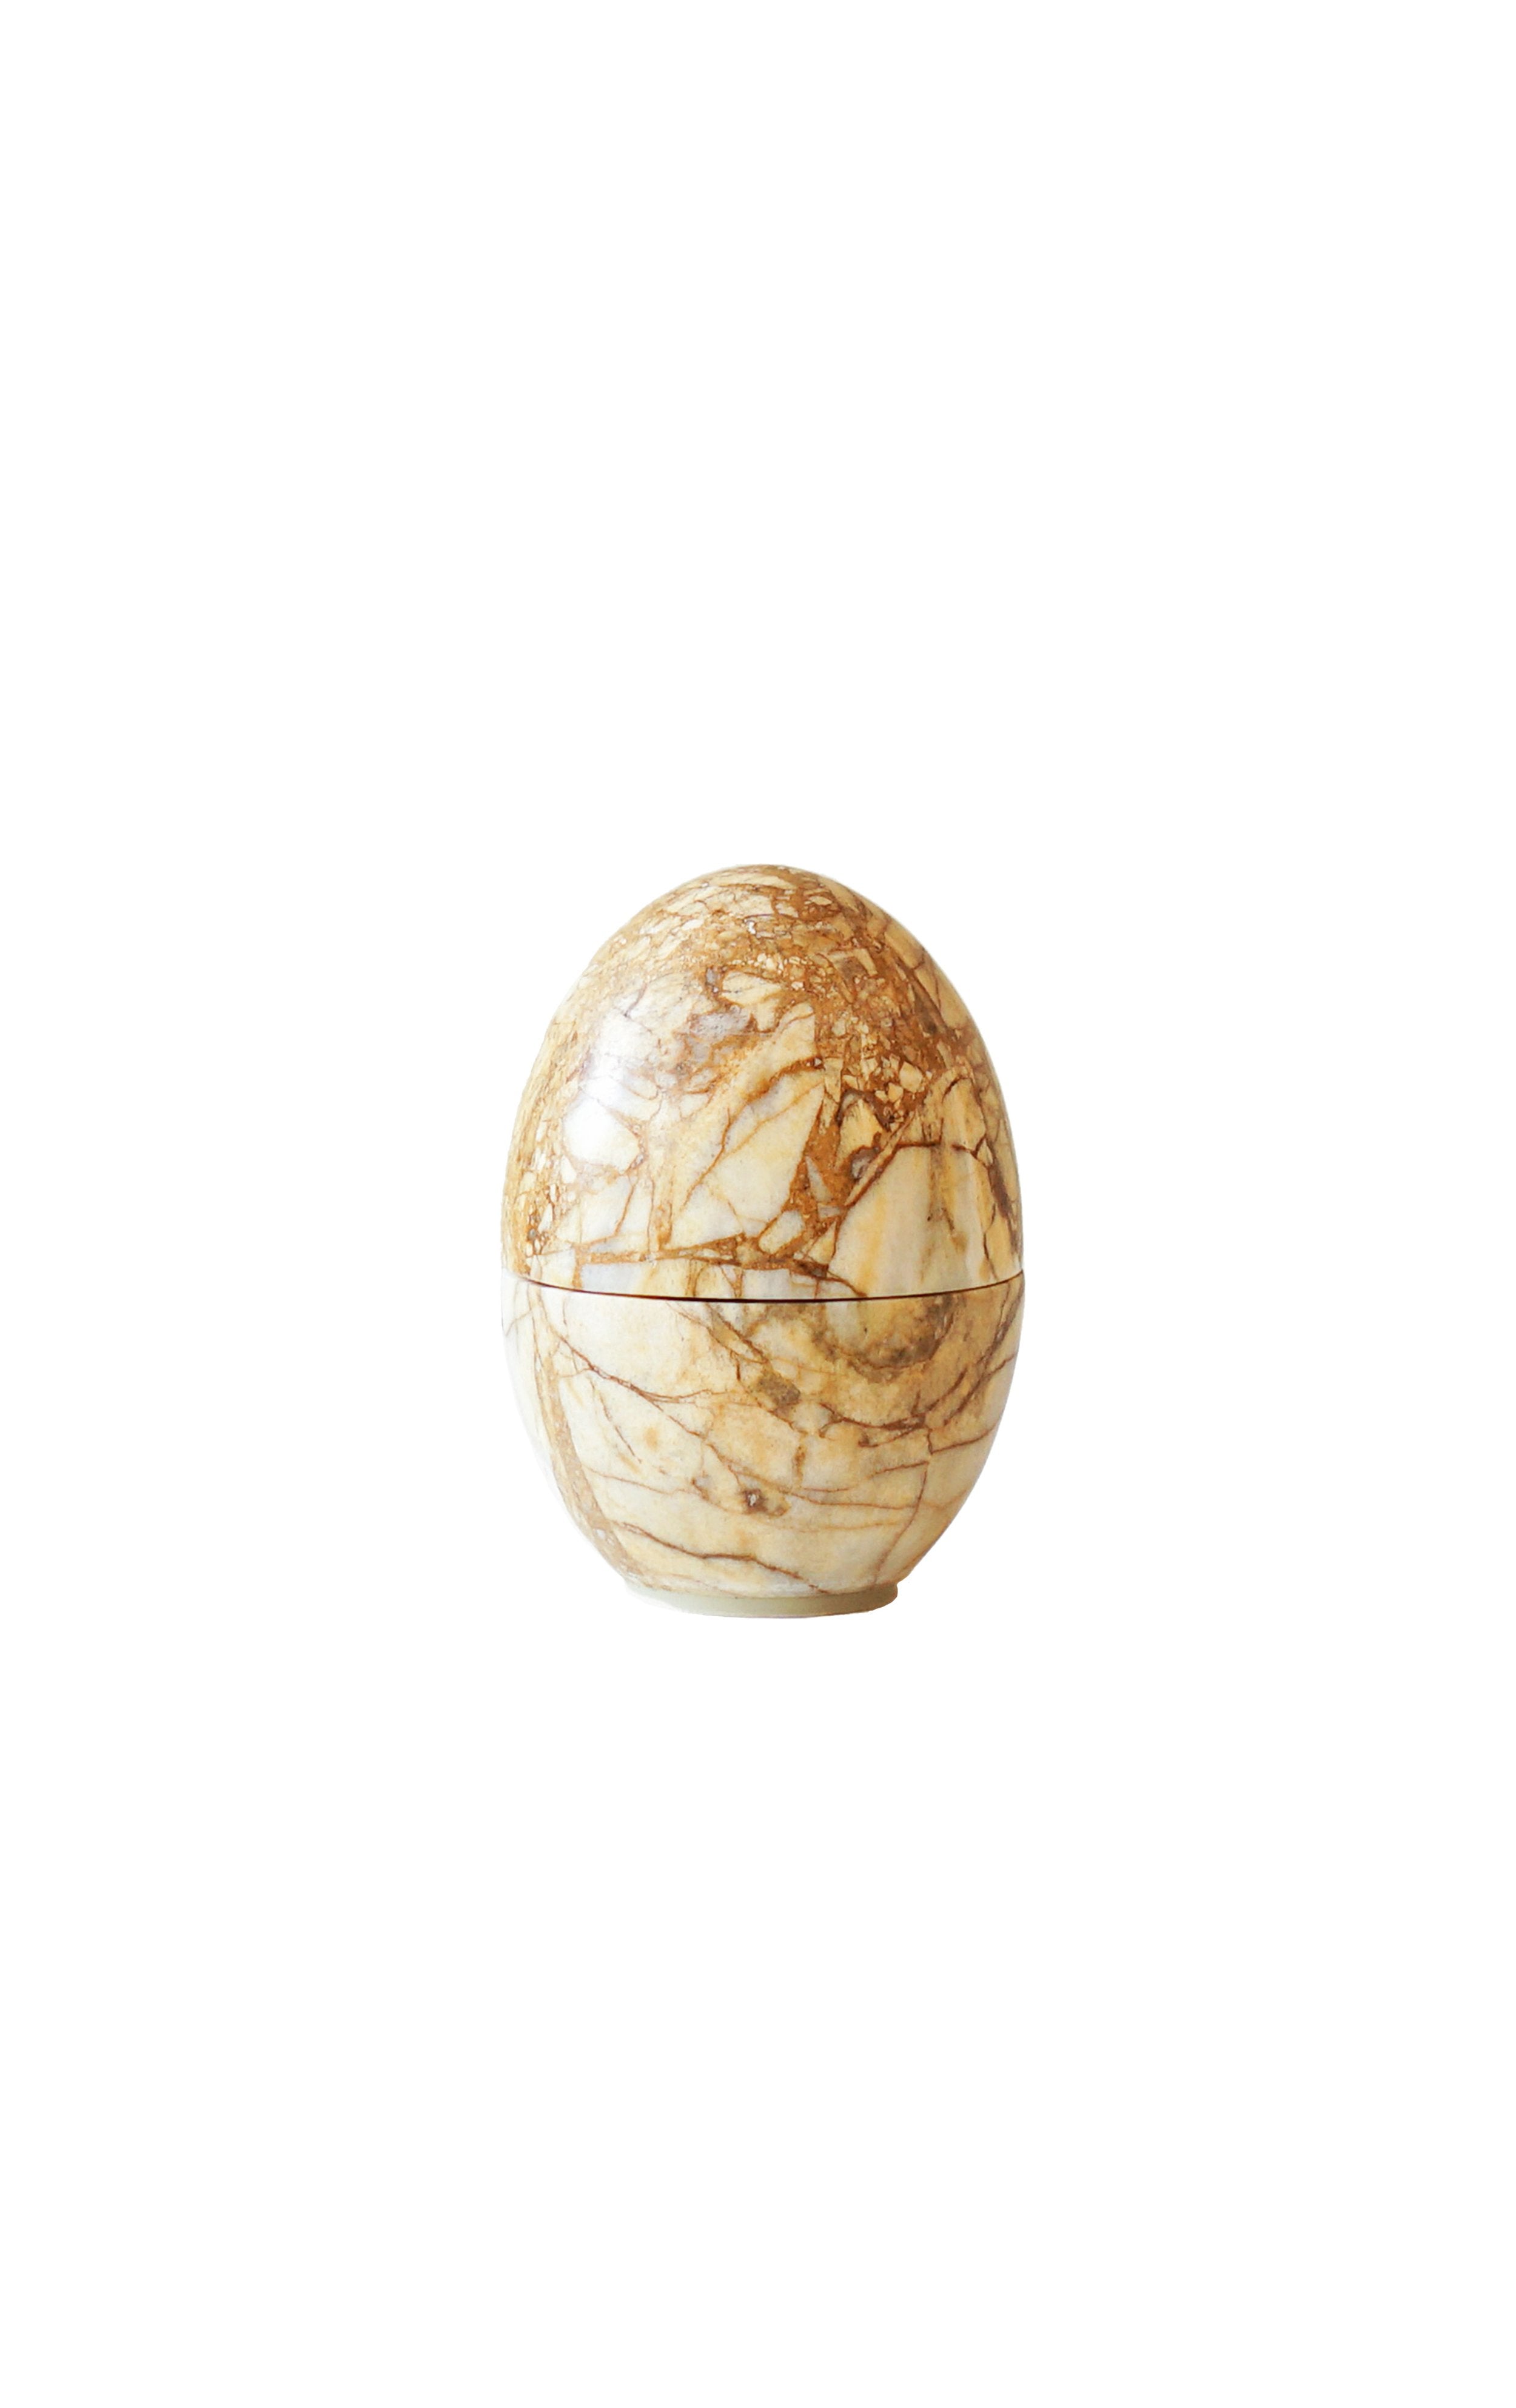 Maaari for Mister Green - Marble Egg Grinder - Amber